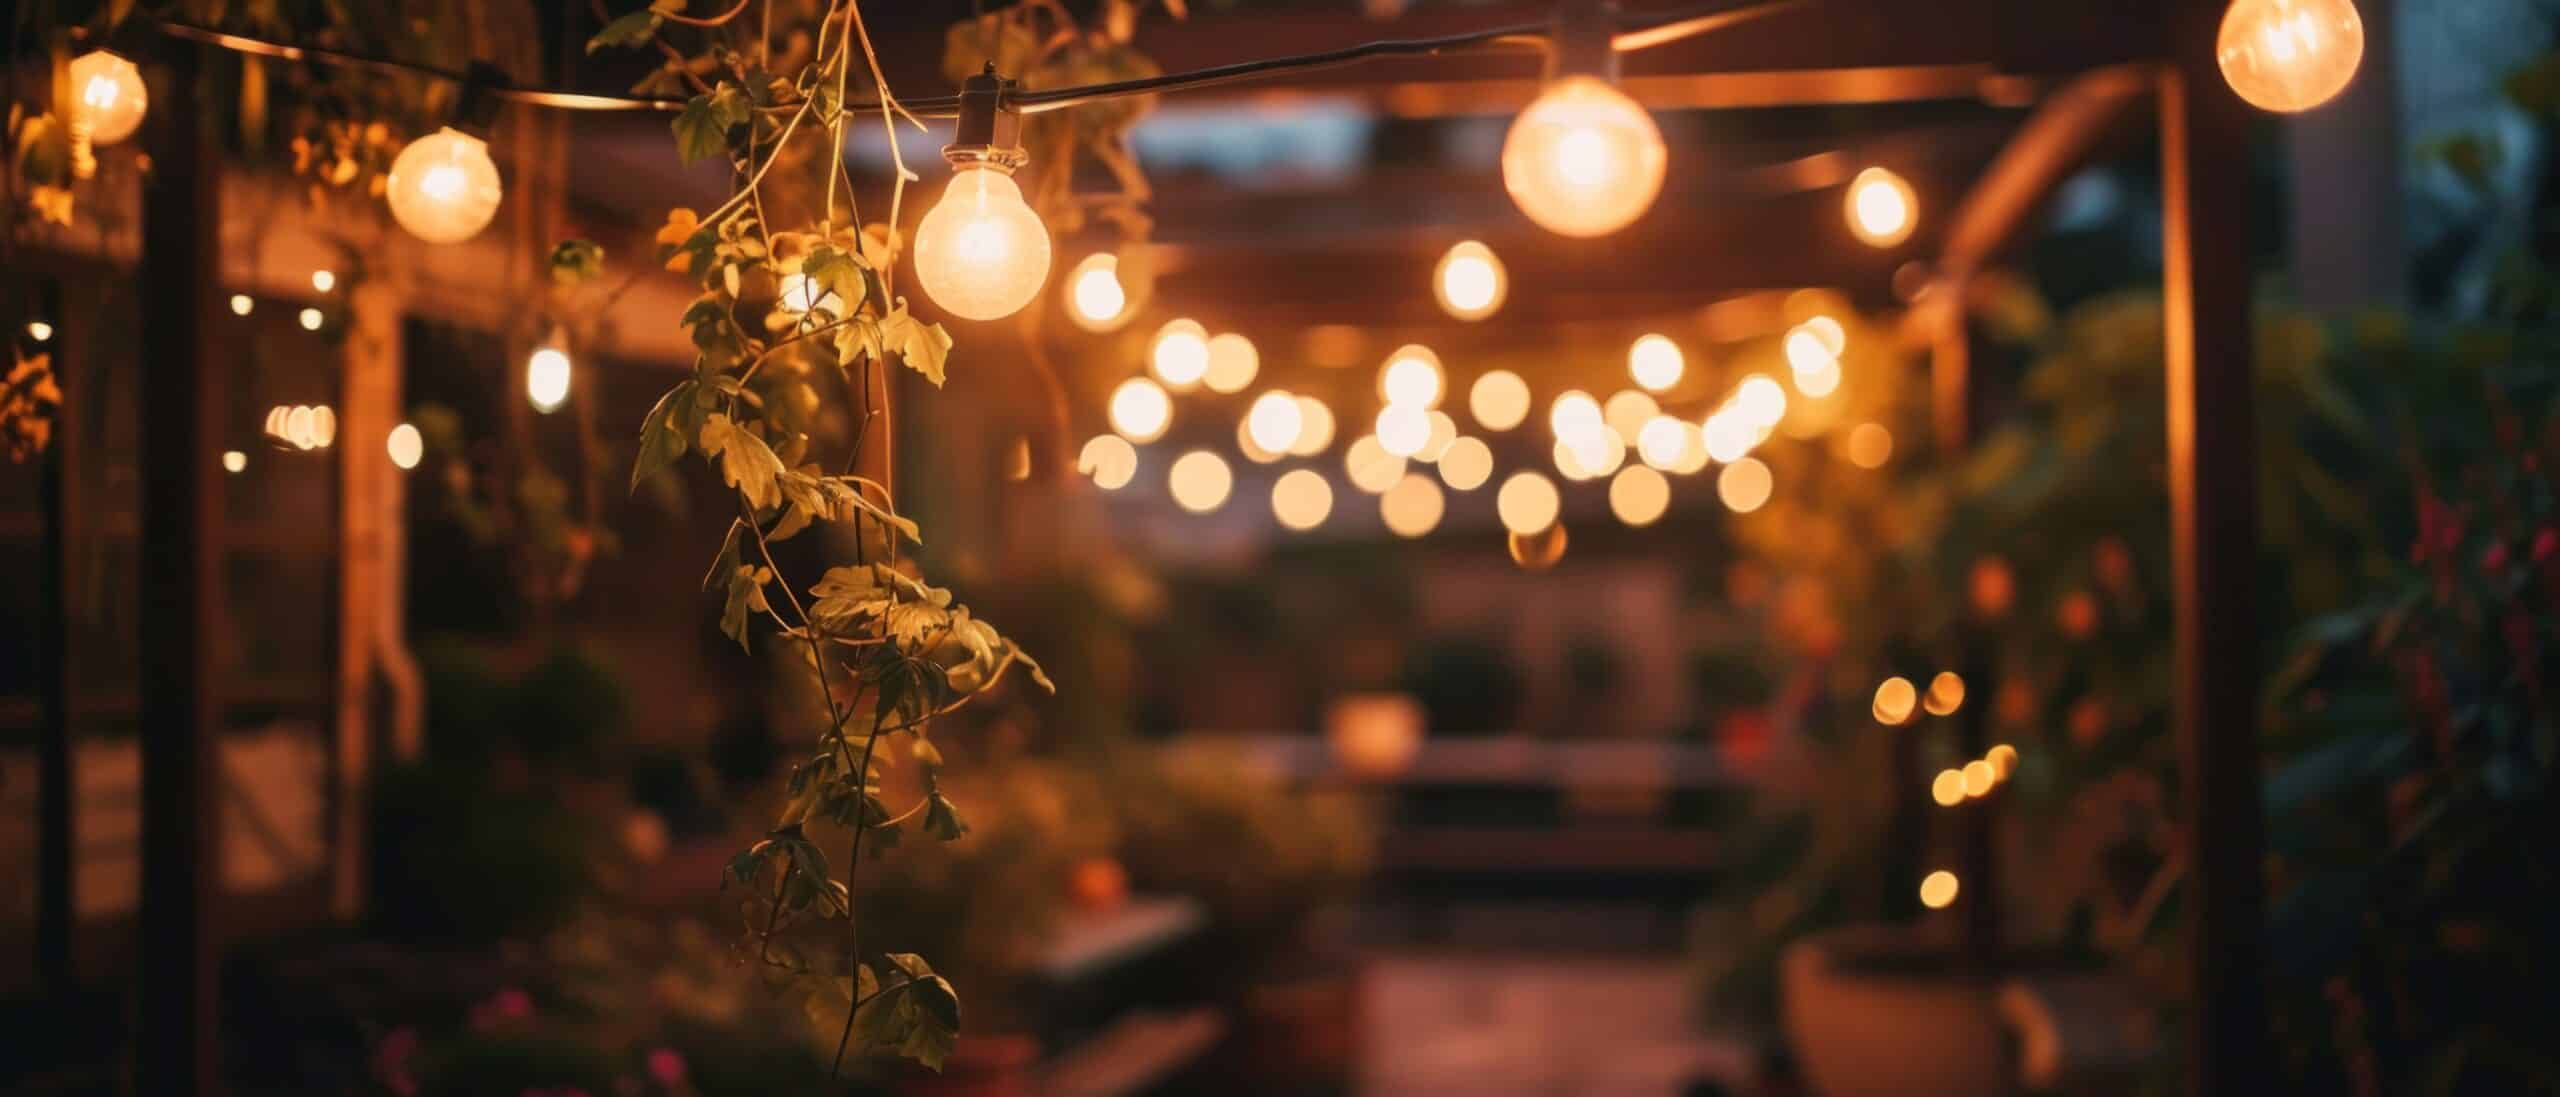 www.appr.com : Lighting a backyard for parties: Tips?